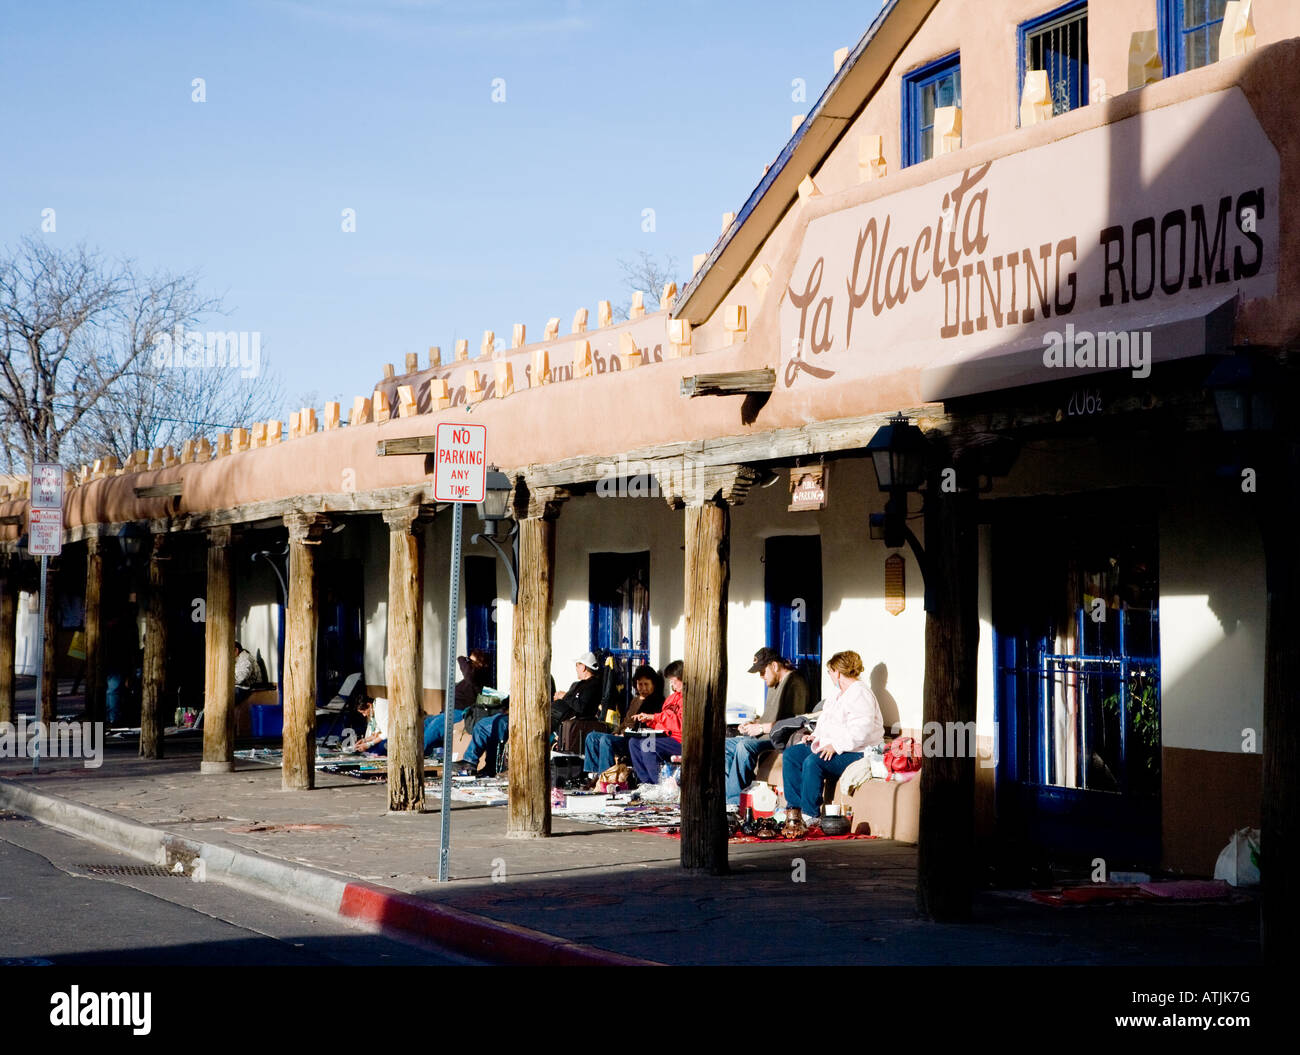 La Placita Dining Rooms, Albuquerque New Mexico Stock Photo